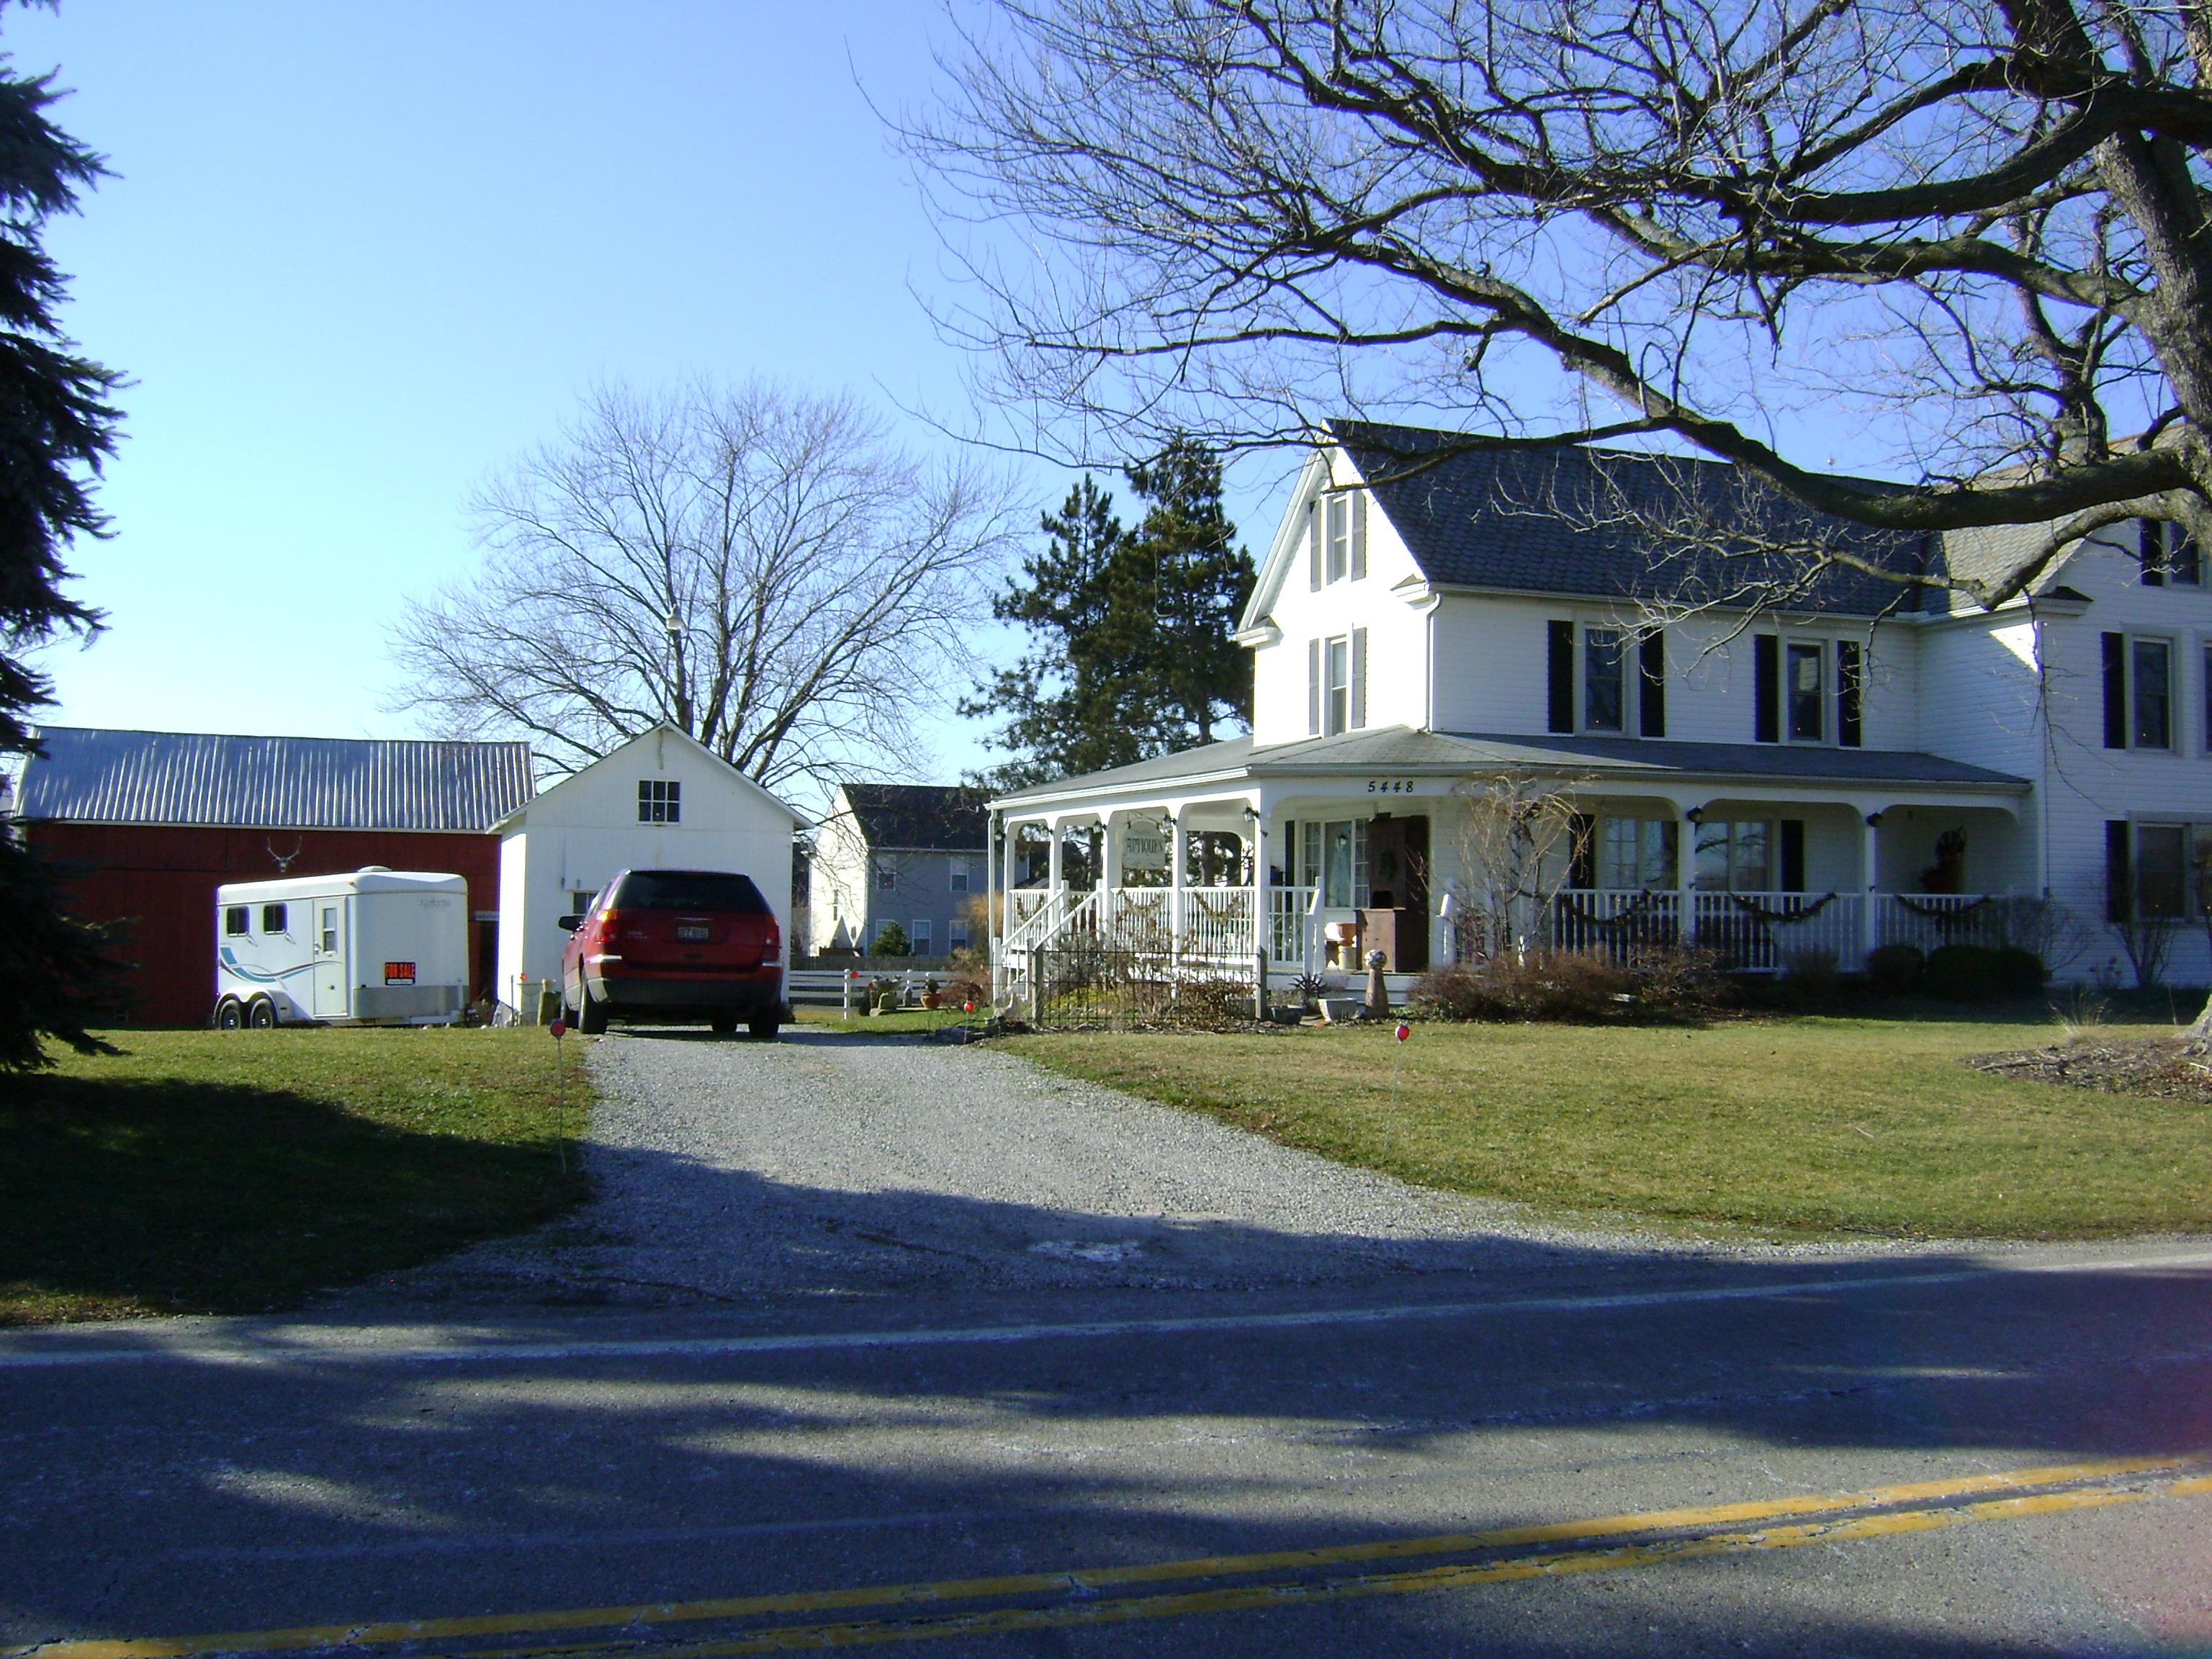 5448 Stoney Ridge Rd, North Ridgeville, Ohio, 44039, SOLD HOME, 4 bedroom, 3.5 bath century colonial, wrap around porch, 1.5 acres. barn, mini farm 